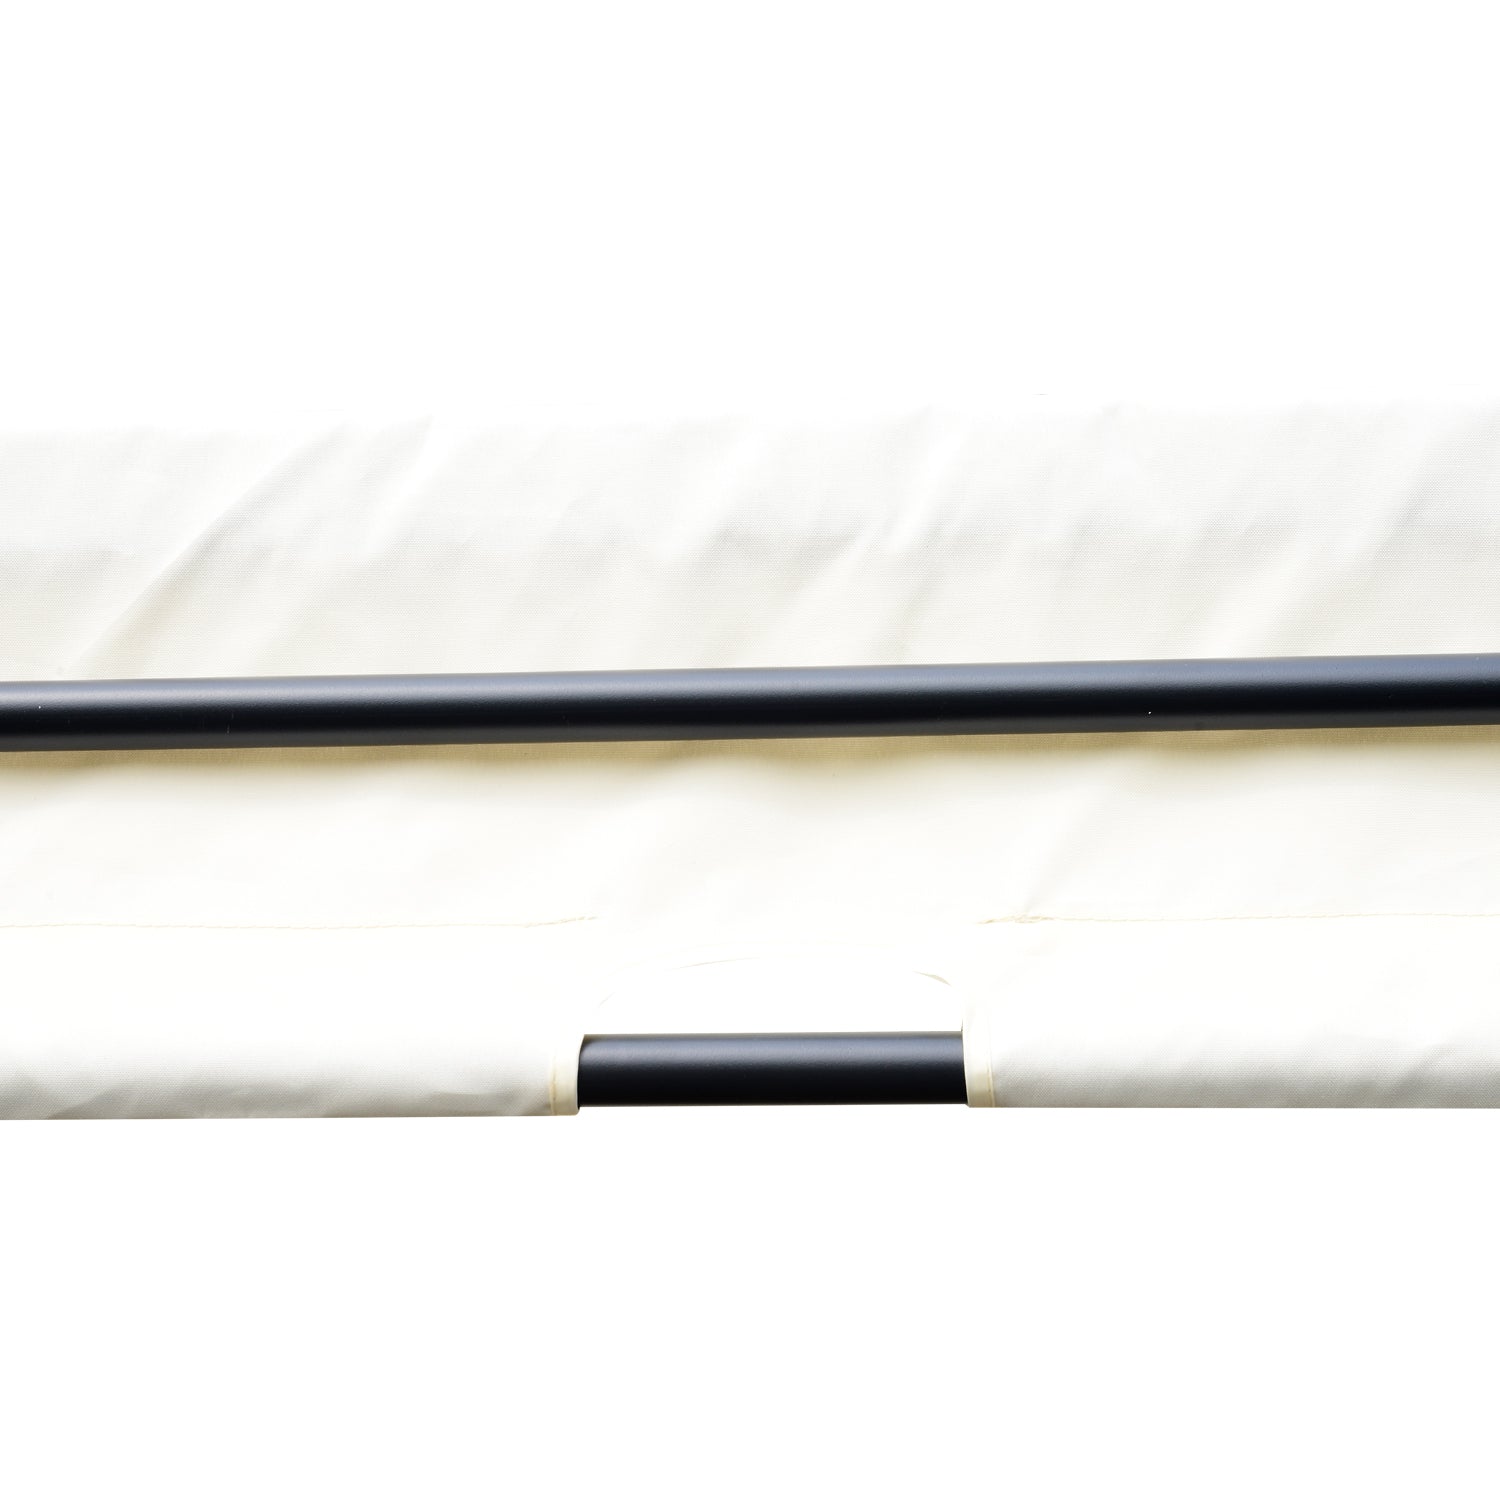 10' x 10' Steel Pergola Retractable Water Resistant Canopy- Cream White at Gallery Canada